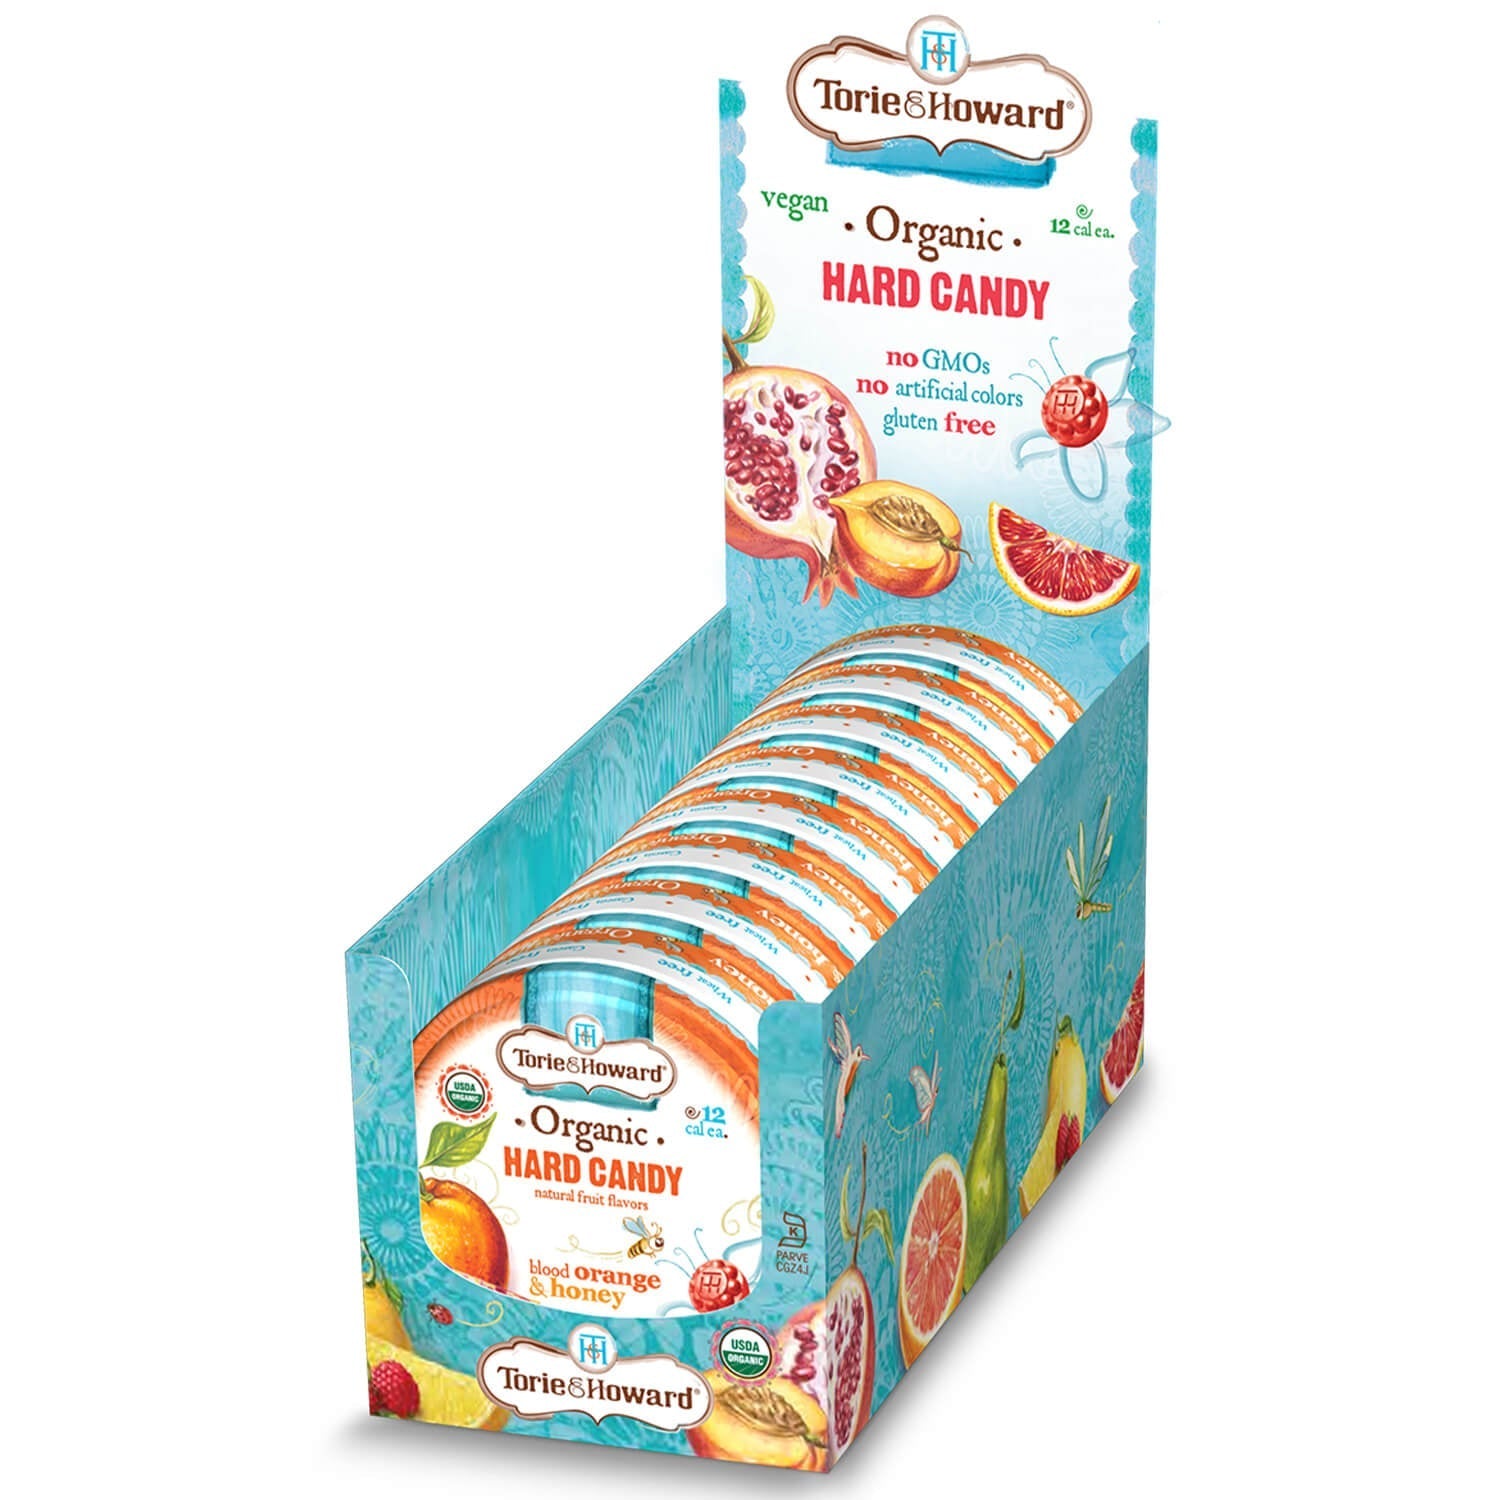 Torie & Howard Blood Orange and Honey Organic Hard Candy 2oz Tins (8ct Box)